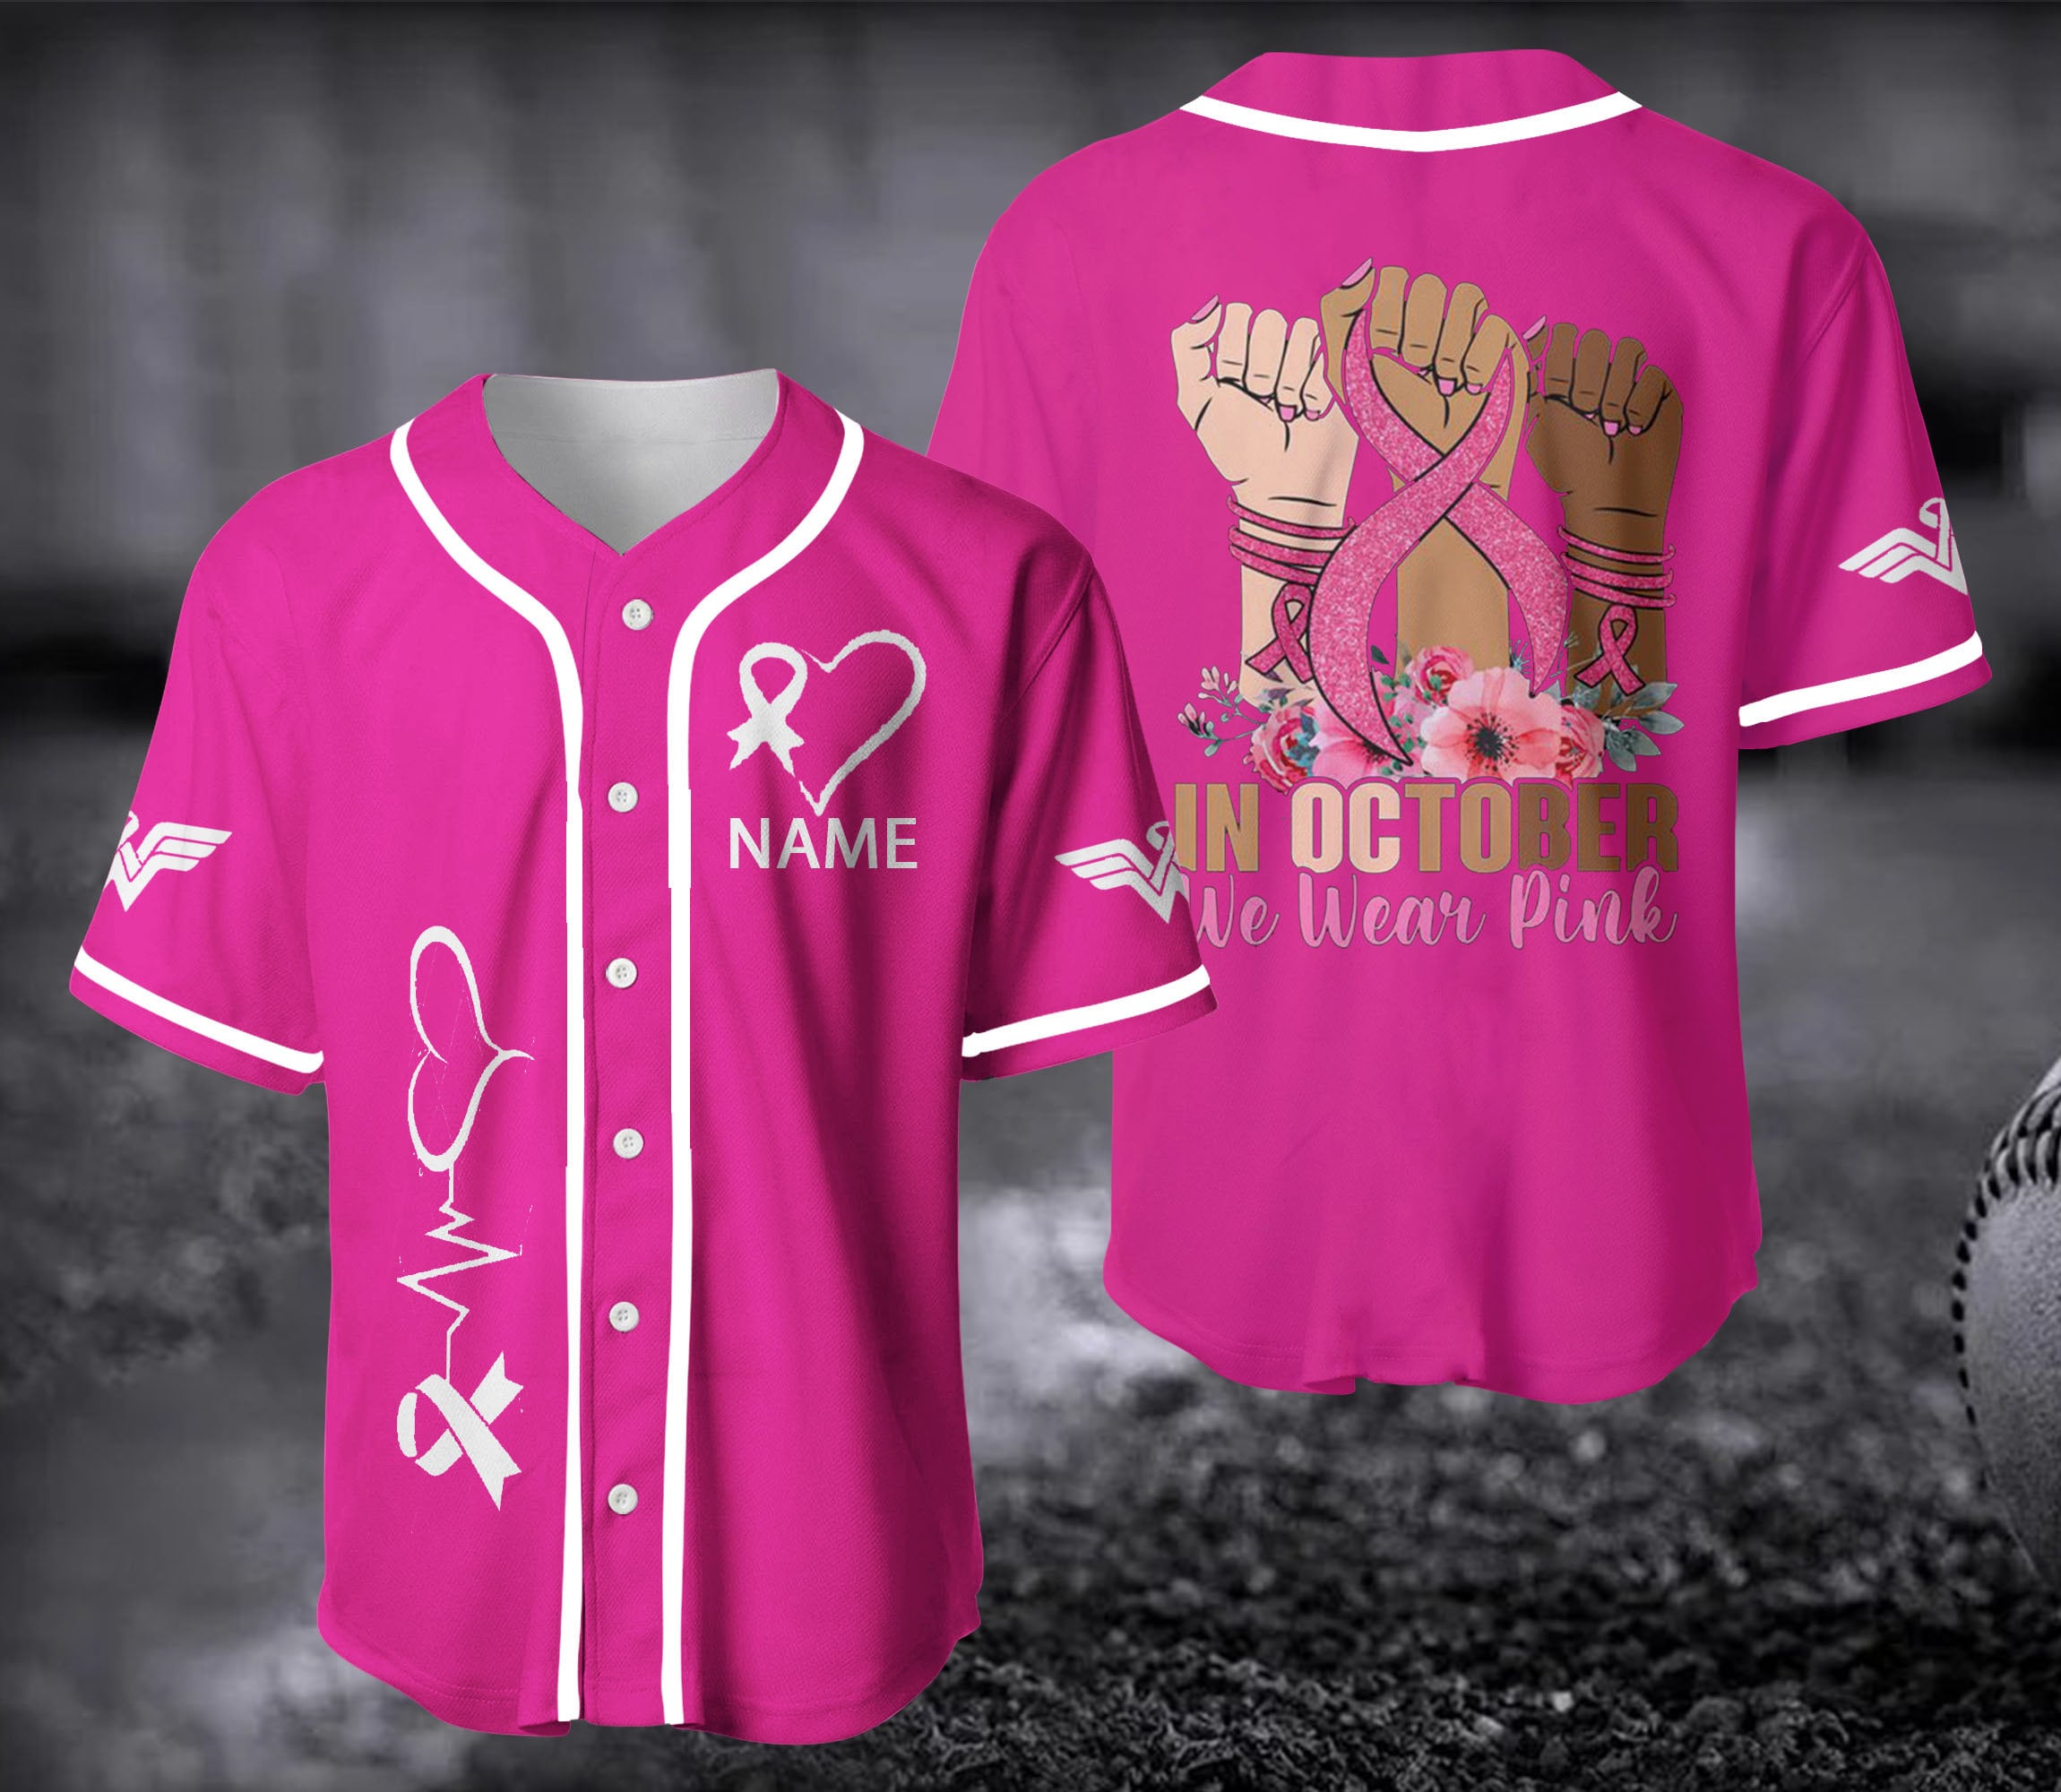 Pink Baseball Tee – Nashville Dollys